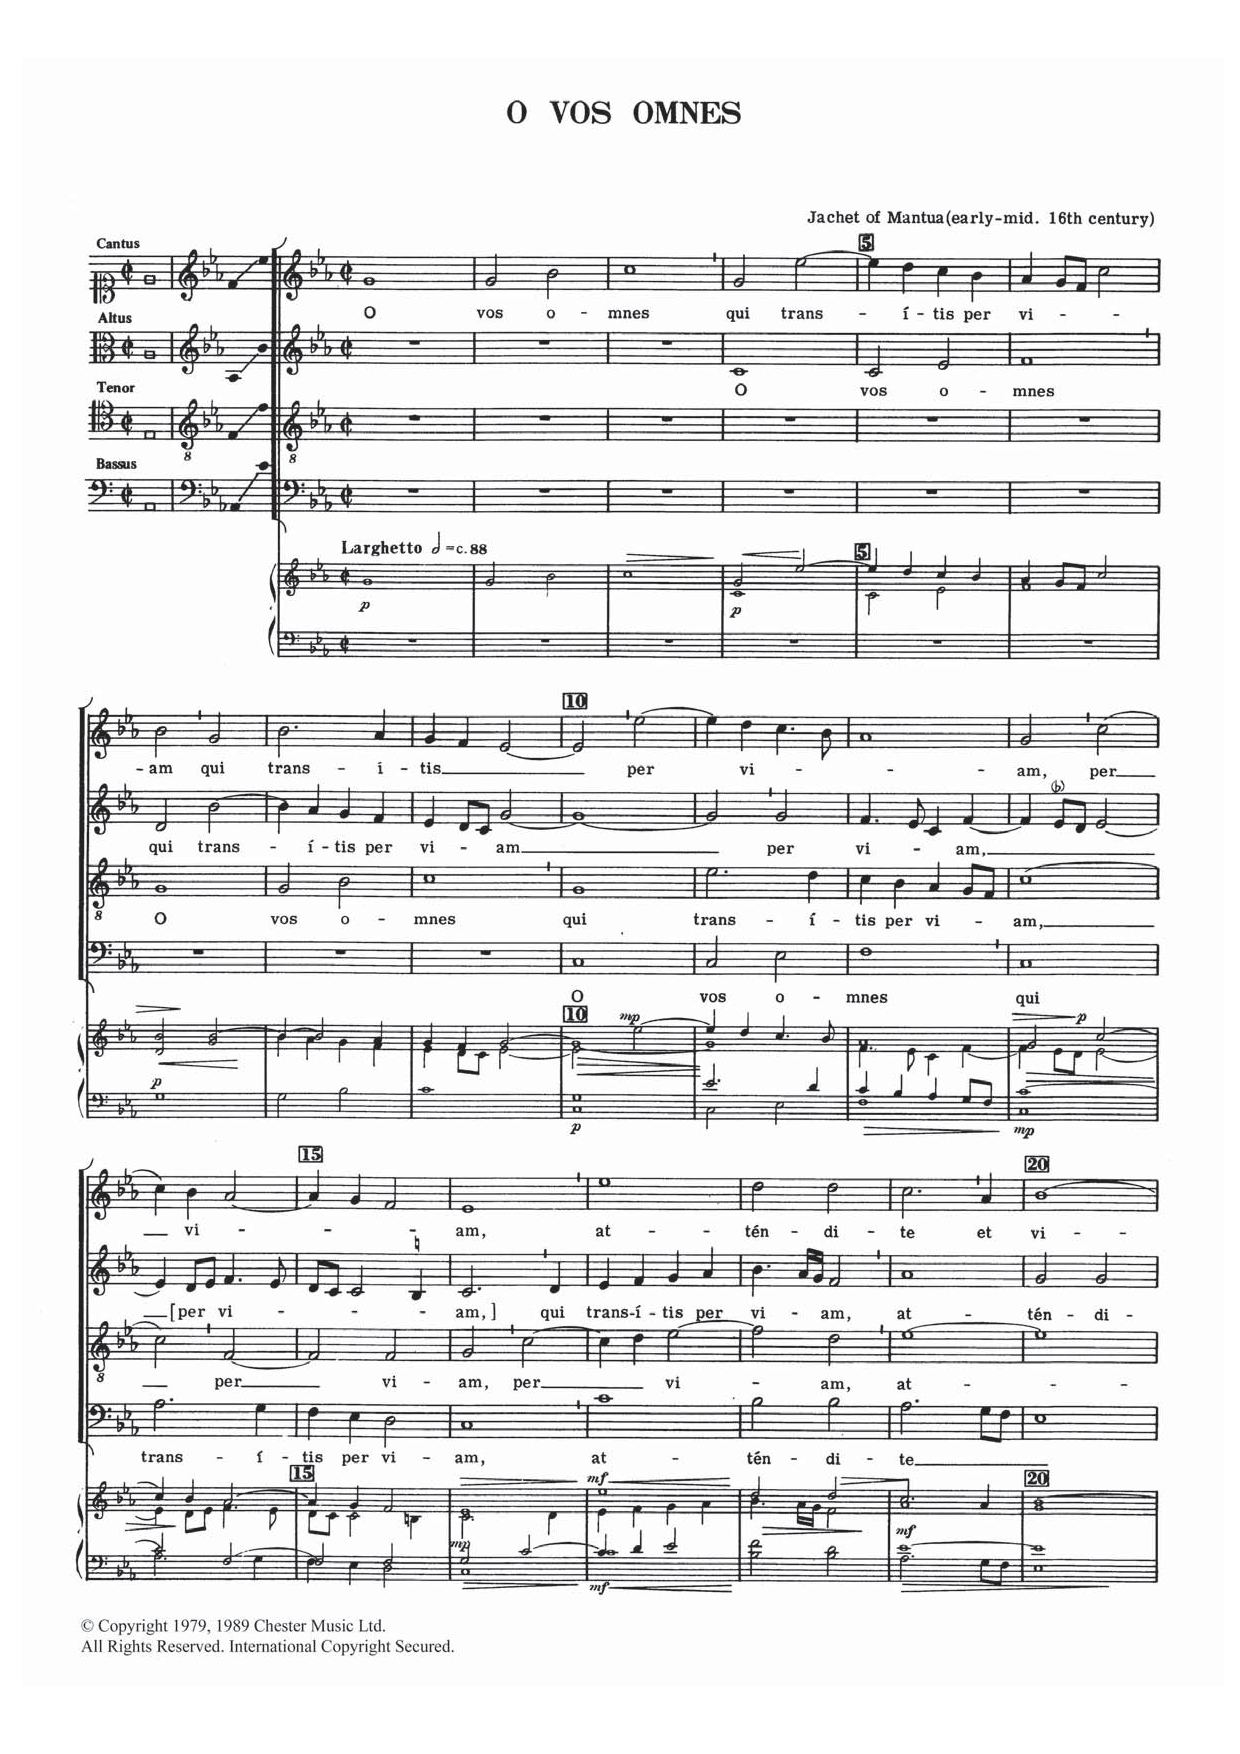 Jachet of Mantua O Vos Omnes Sheet Music Notes & Chords for Choir - Download or Print PDF